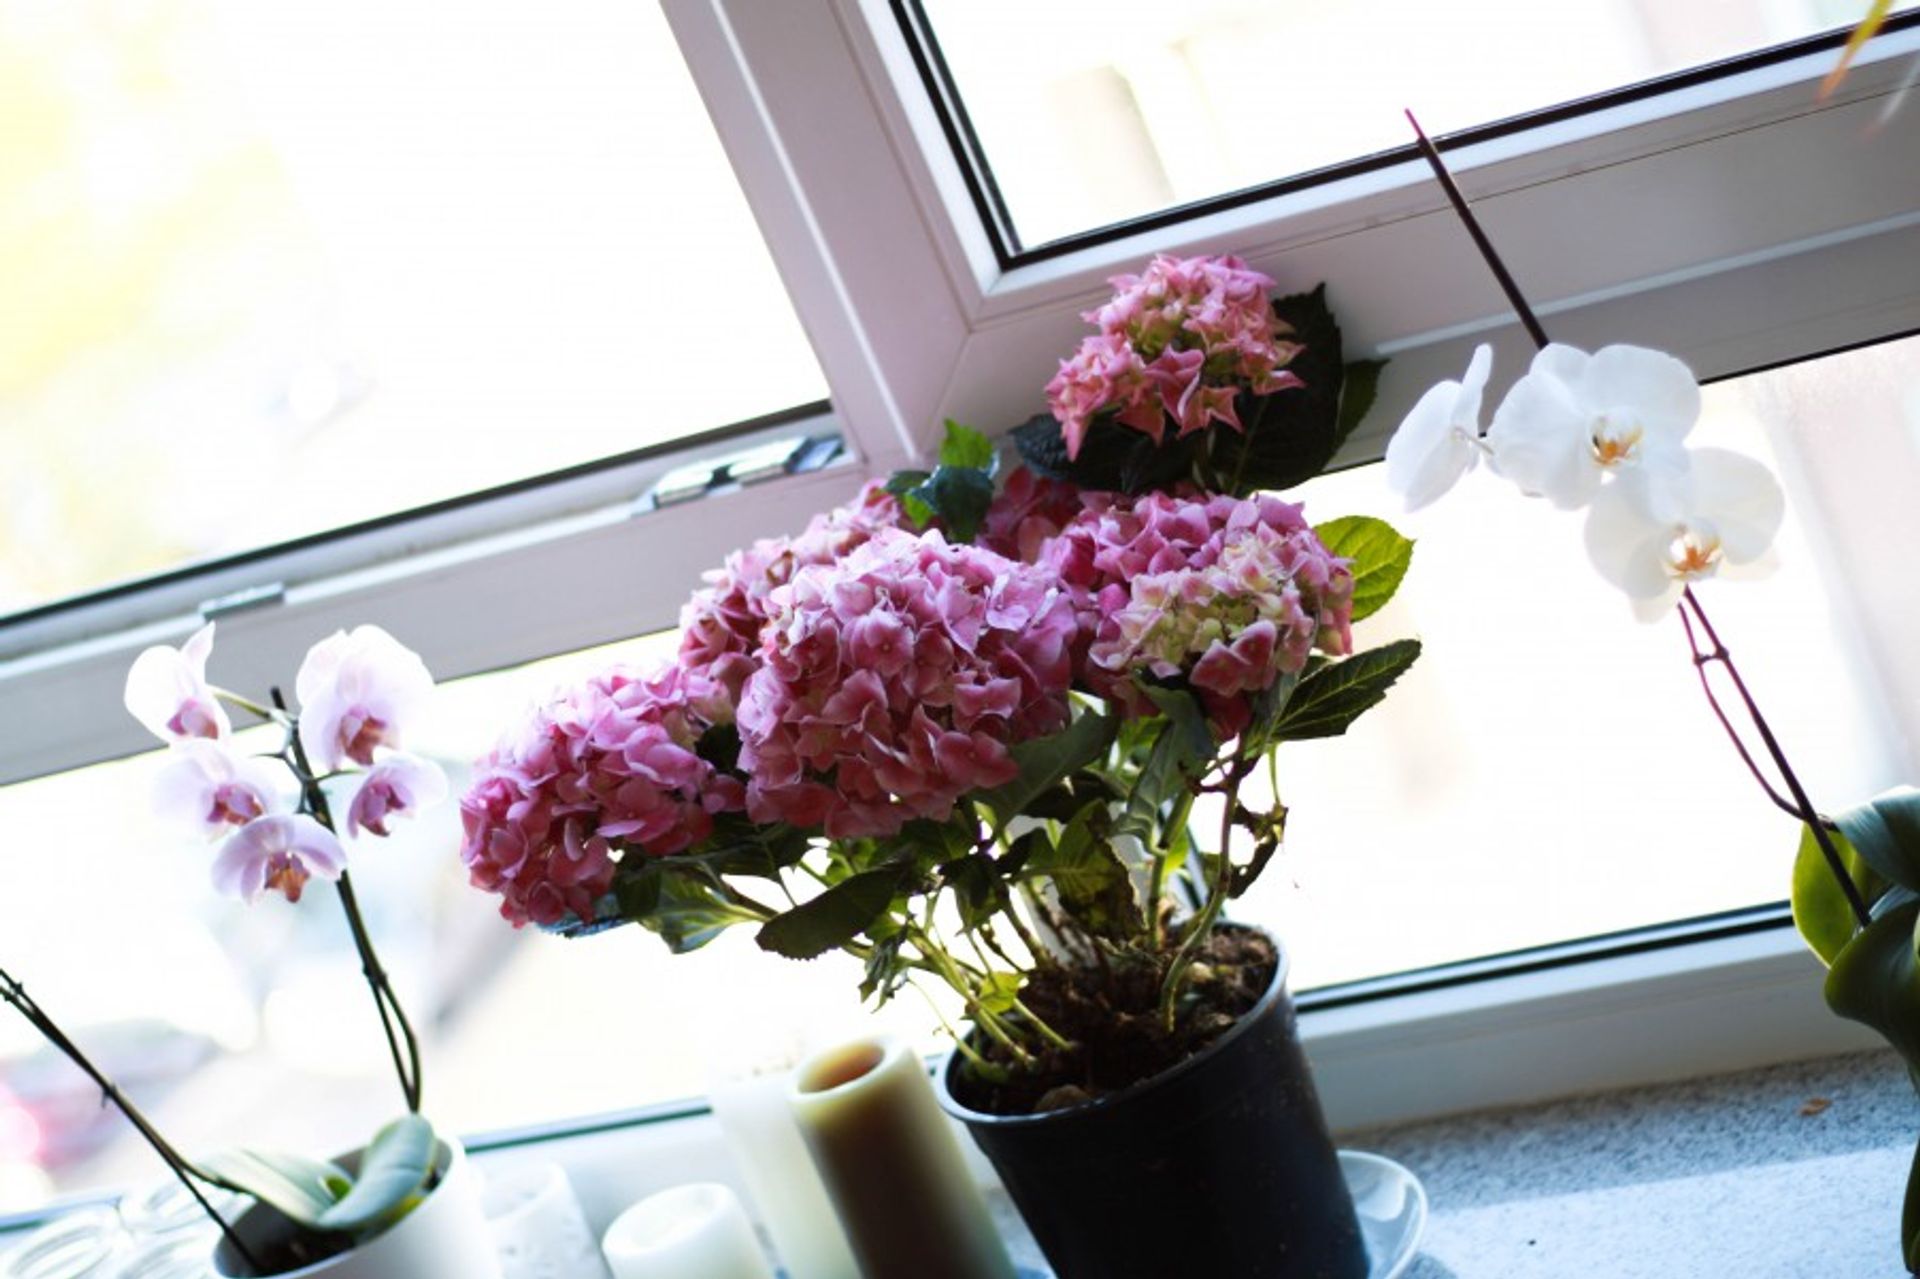 My flower-filled windowsill